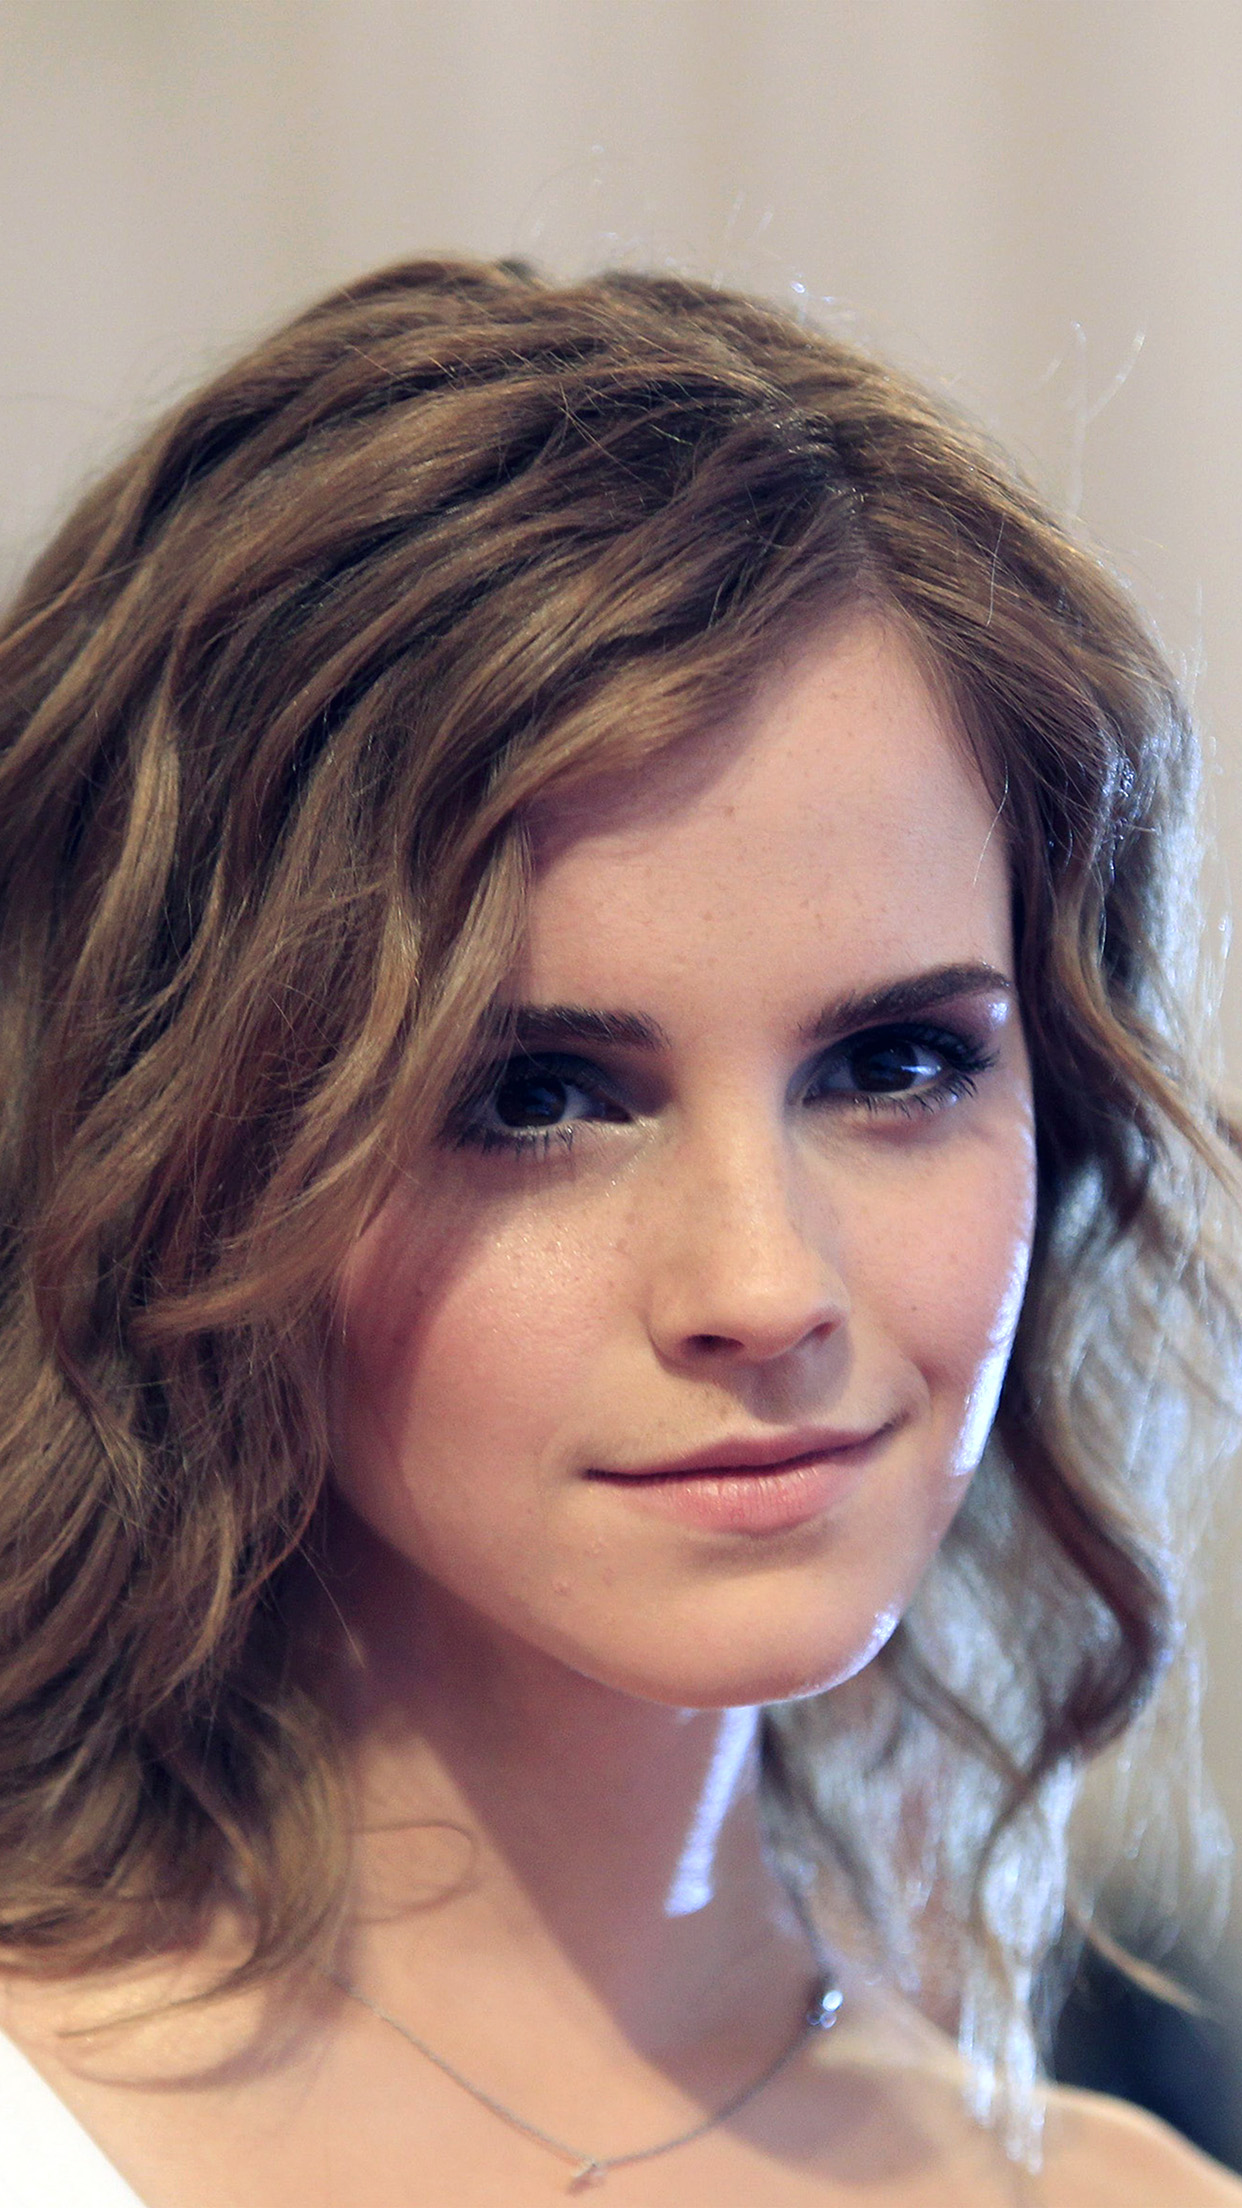 Emma Watson Face Actress Celebrity Android Wallpaper - HD Wallpaper 